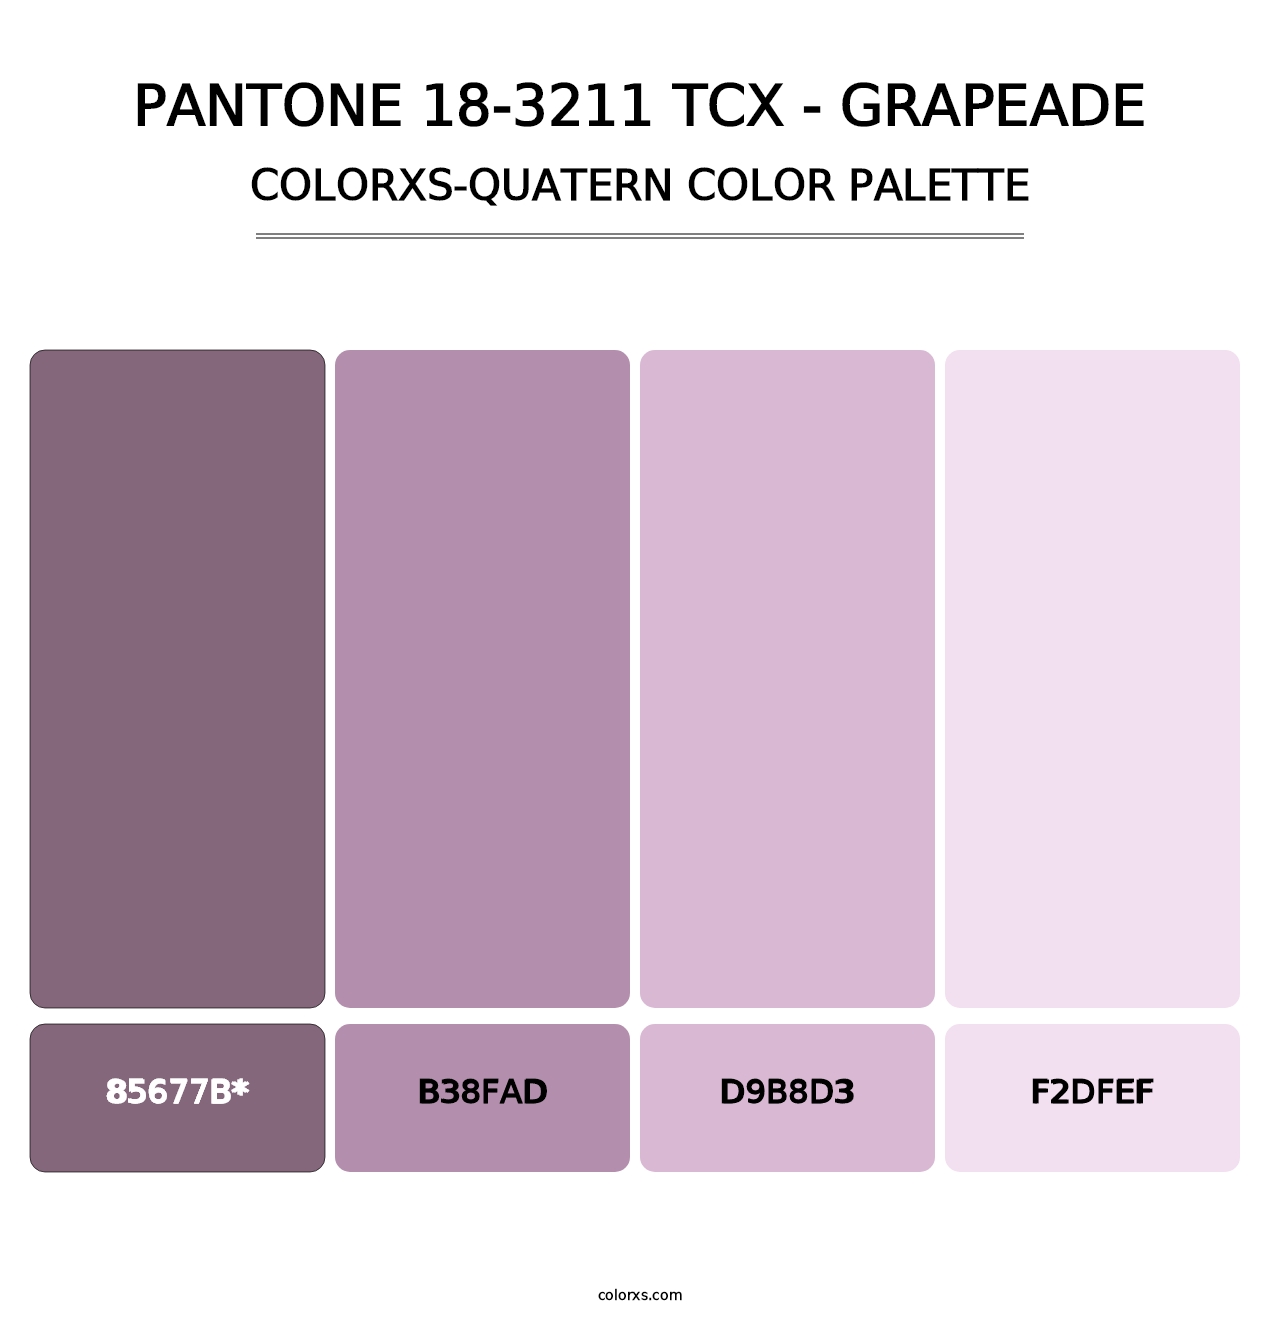 PANTONE 18-3211 TCX - Grapeade - Colorxs Quatern Palette